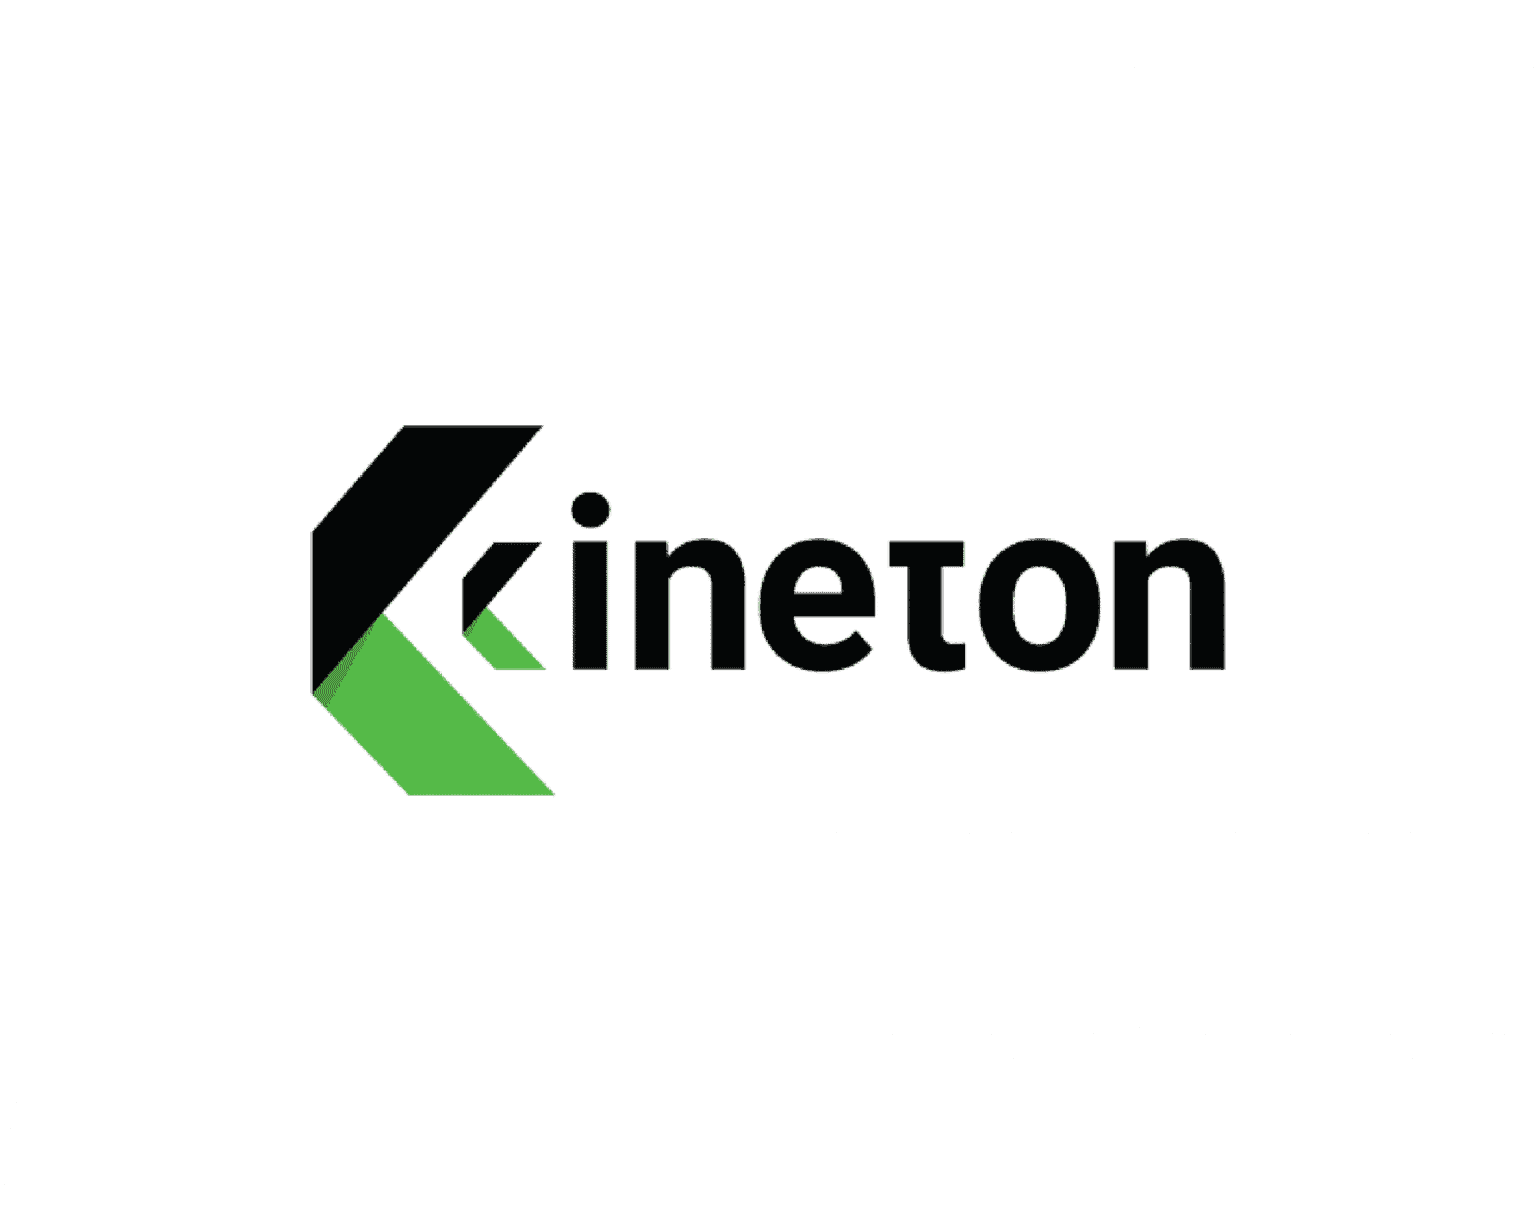 Kineton_-1536x1229